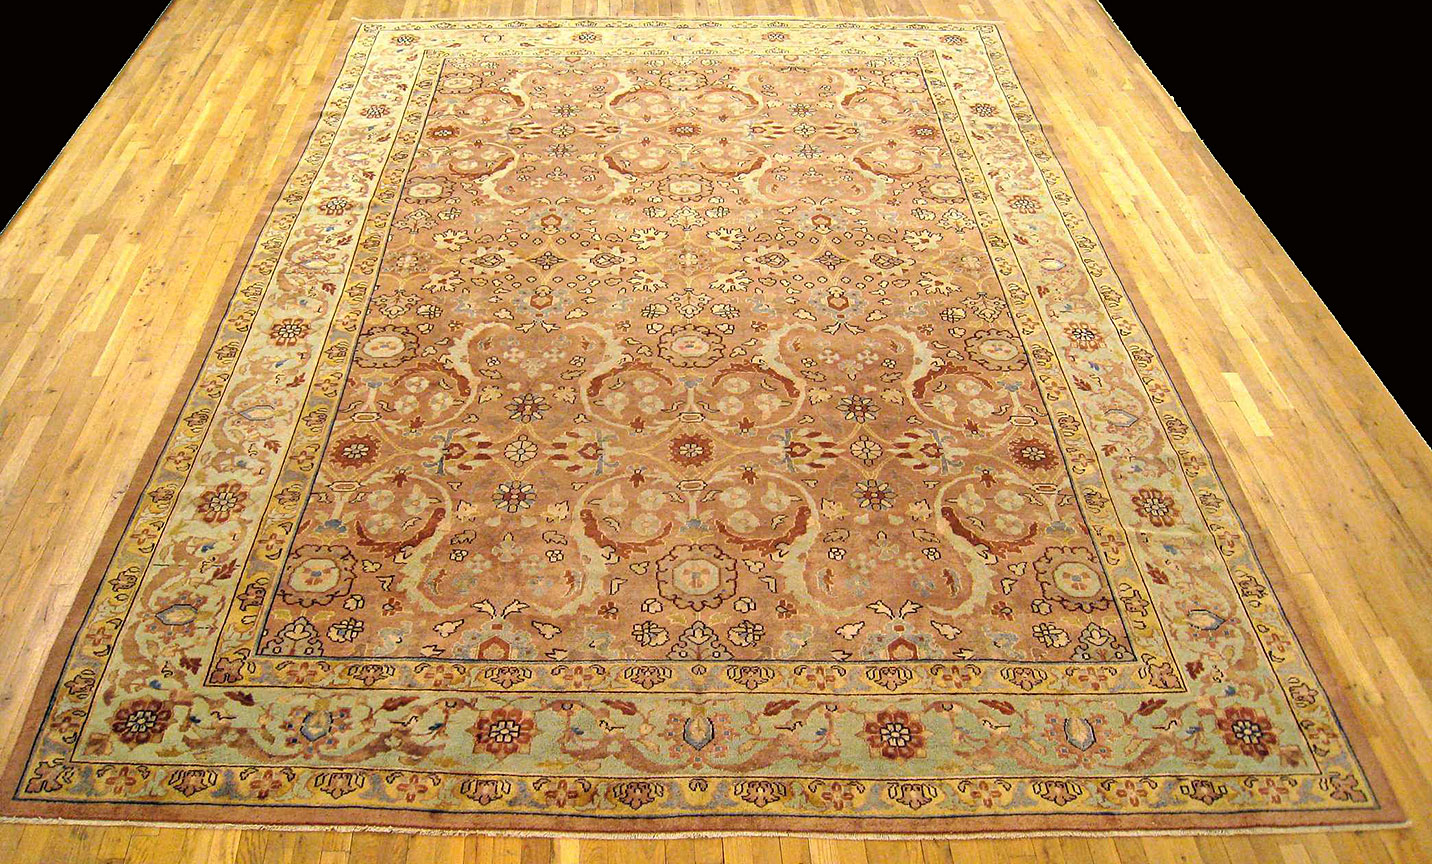 Antique amritsar Carpet - # 9871